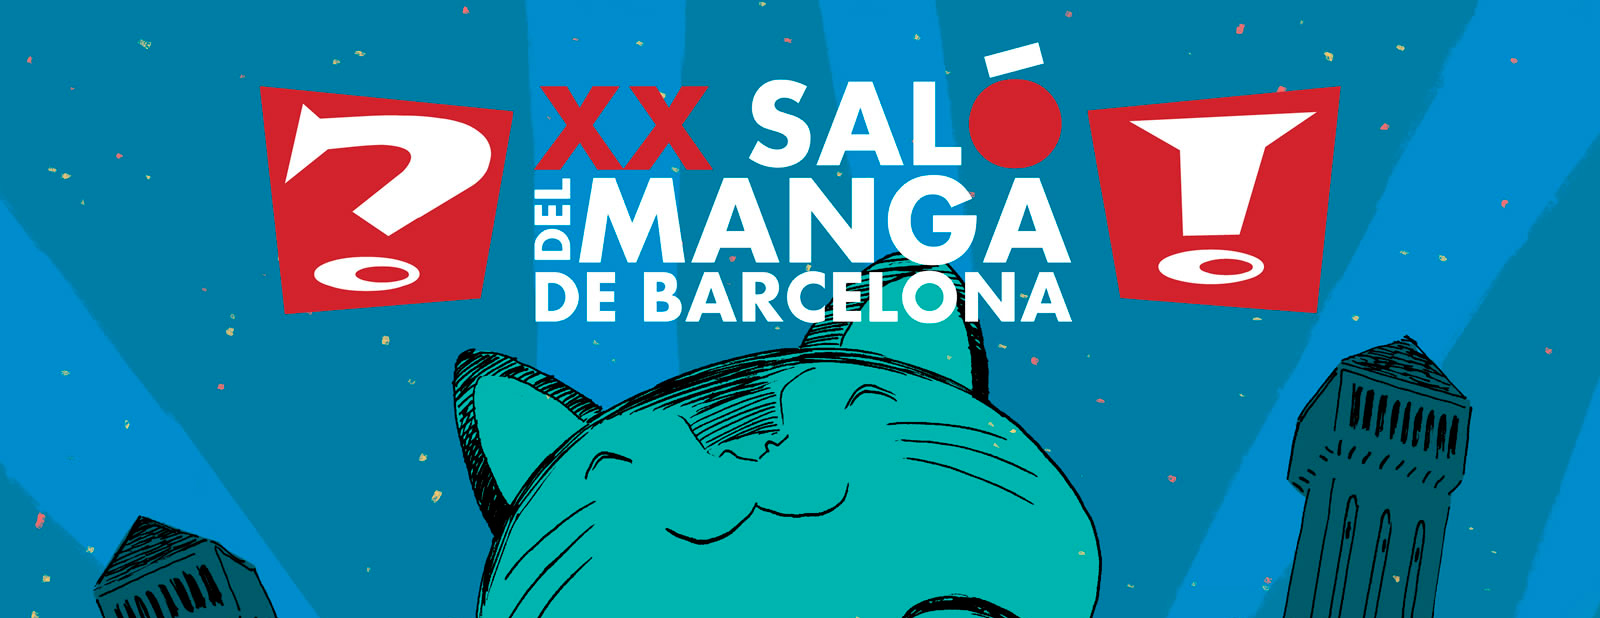 salo-manga-2014-barcelona.jpg